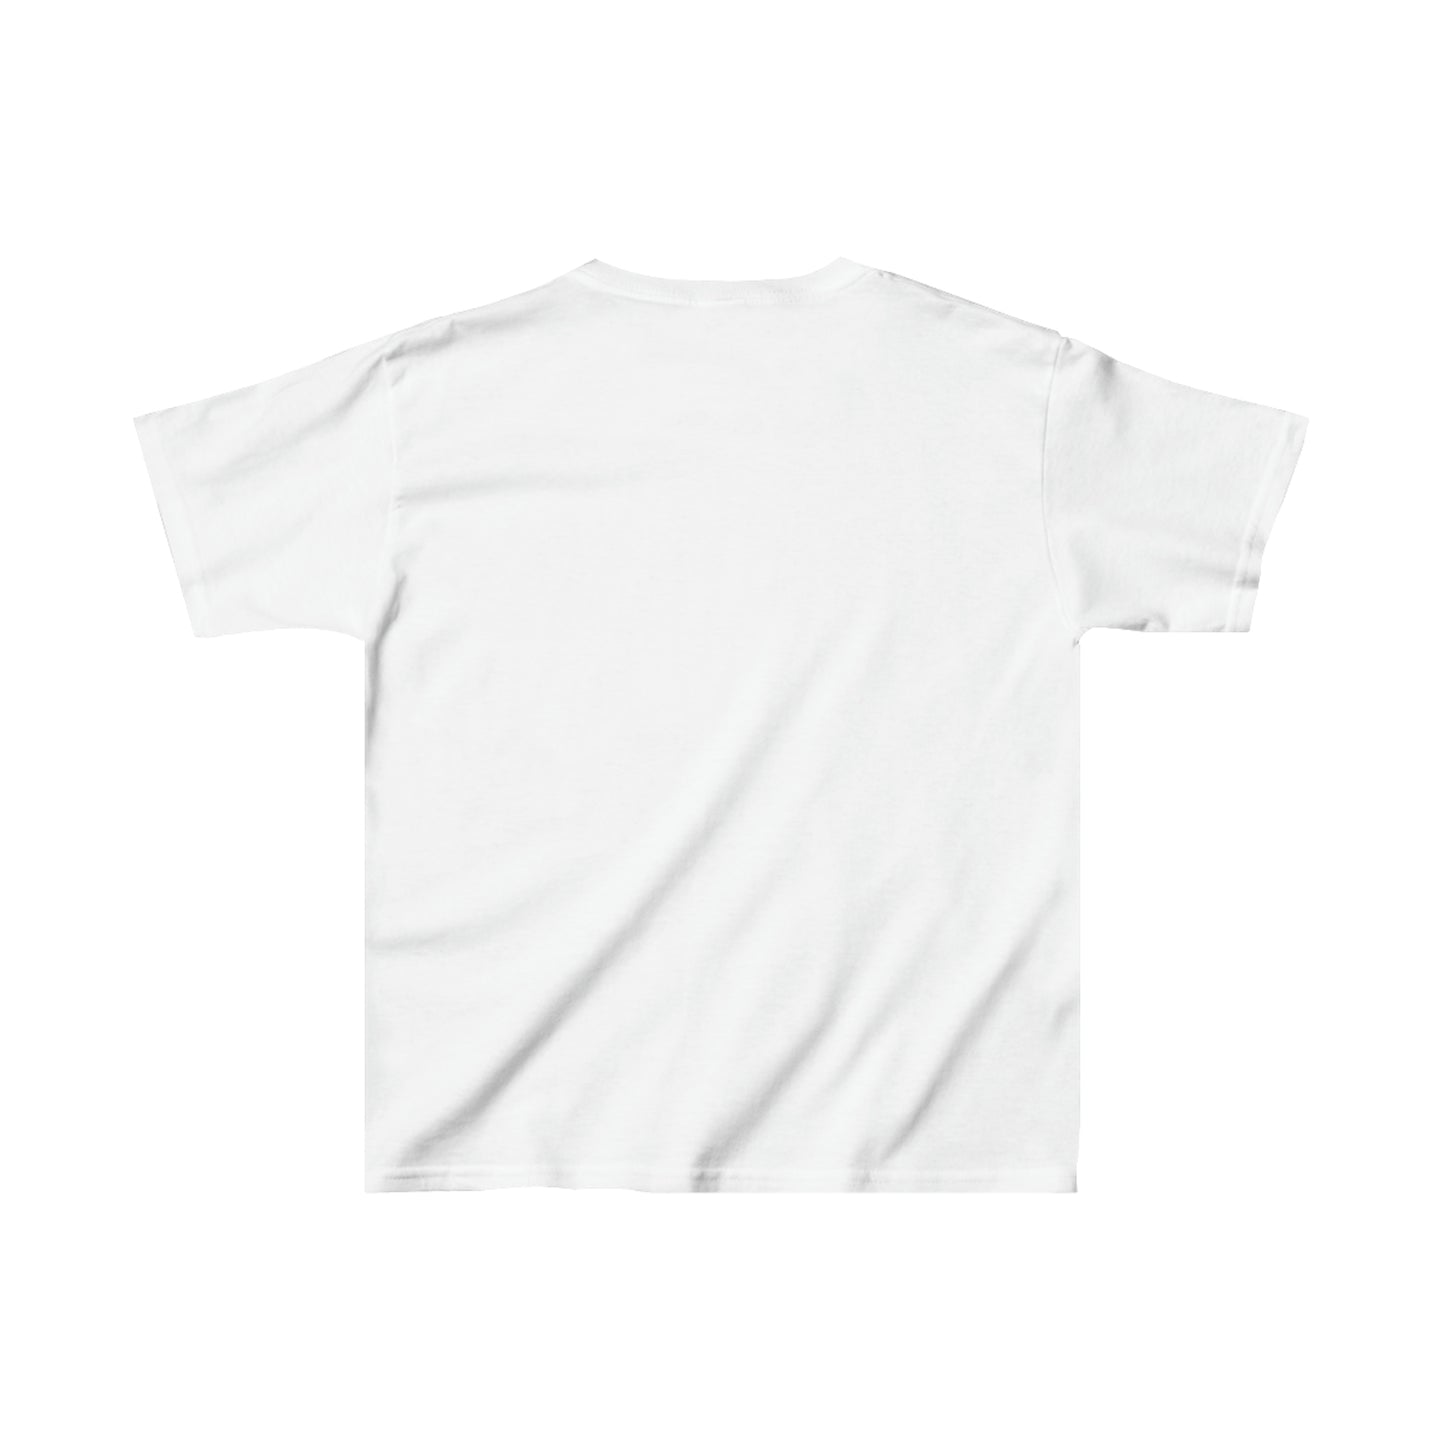 Kids' Unisex Straw-Bear-Ries Print Short-Sleeve T-Shirt